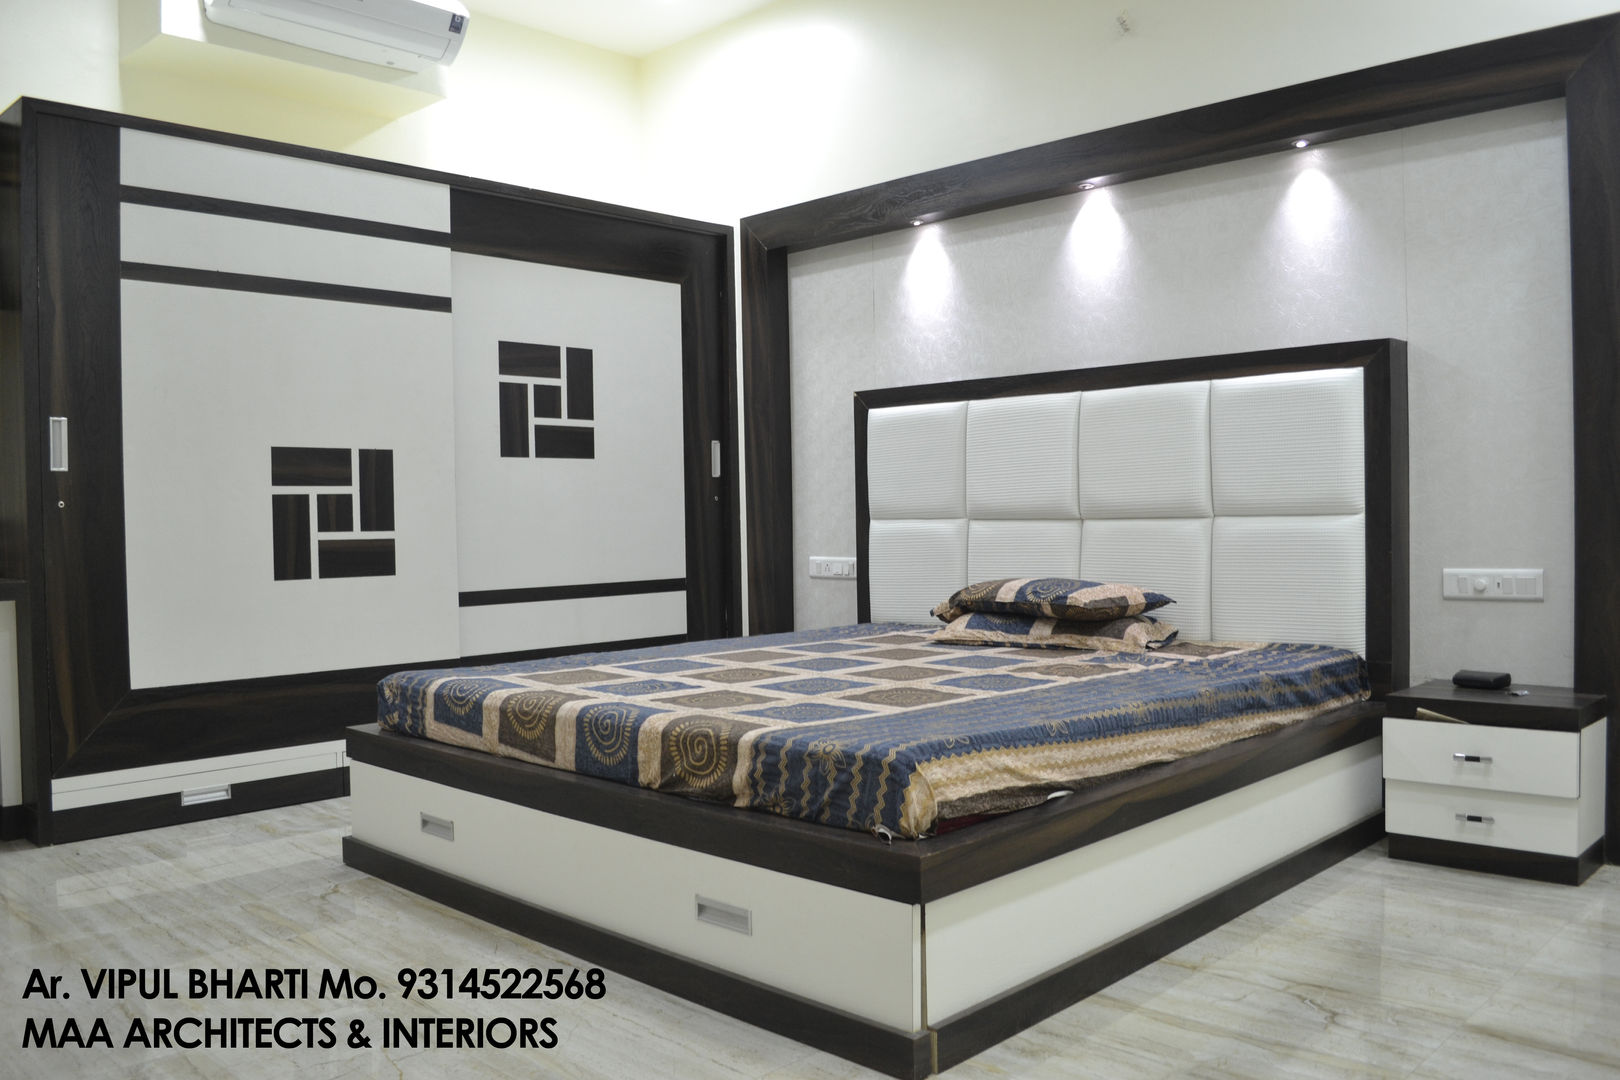 Prem Chelani ji, MAA ARCHITECTS & INTERIOR DESIGNERS MAA ARCHITECTS & INTERIOR DESIGNERS Modern style bedroom